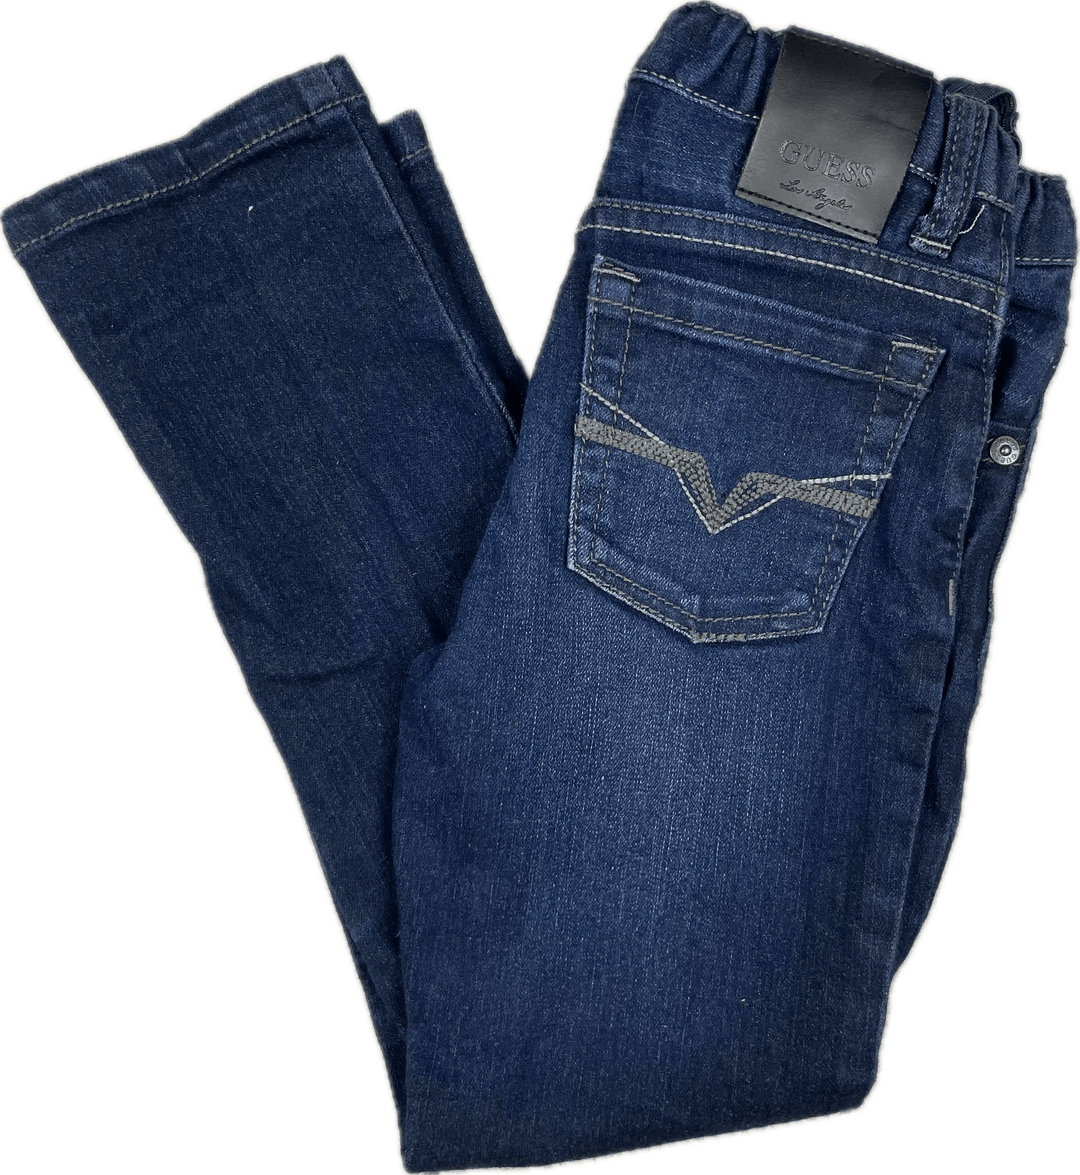 Kids Guess 'Super Skinny Stretch' Jeans - Size 5Y - Jean Pool